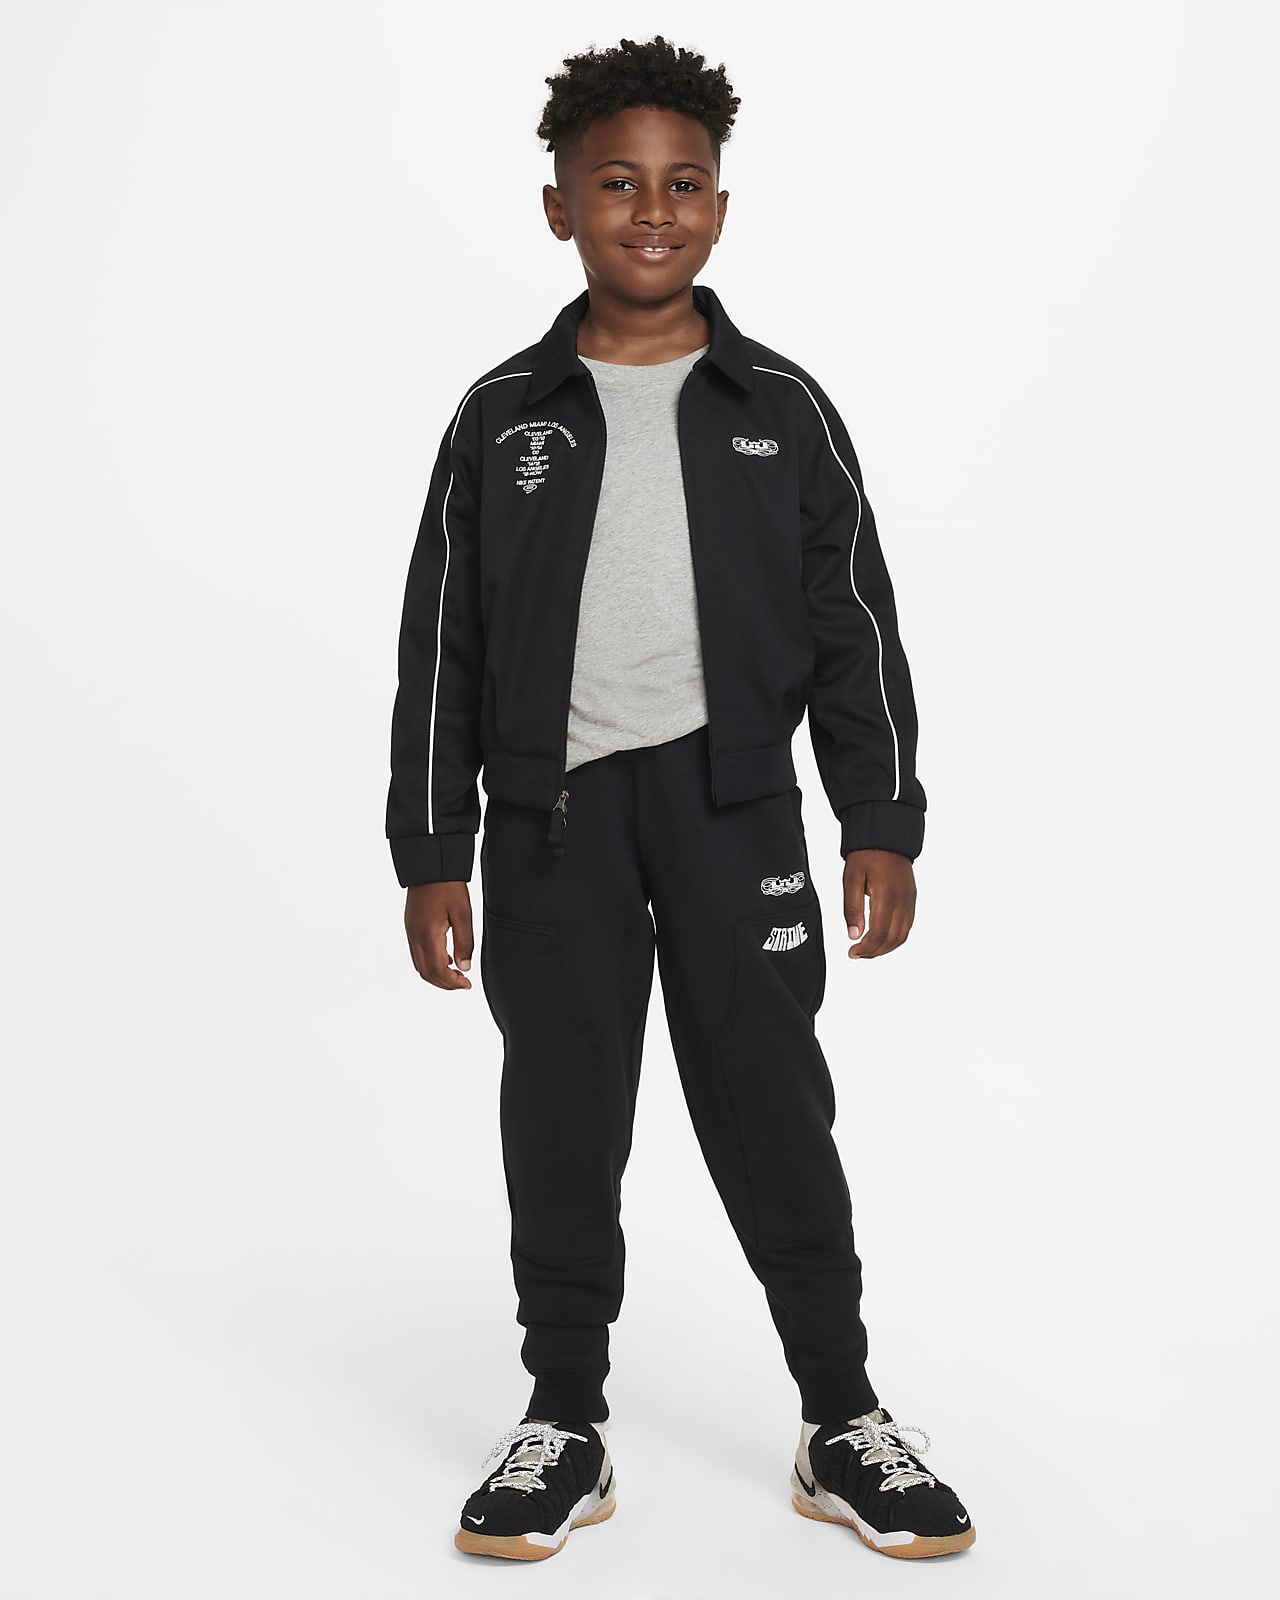 Nike SB Lightweight Skate Jacket, medium olive | Beyond